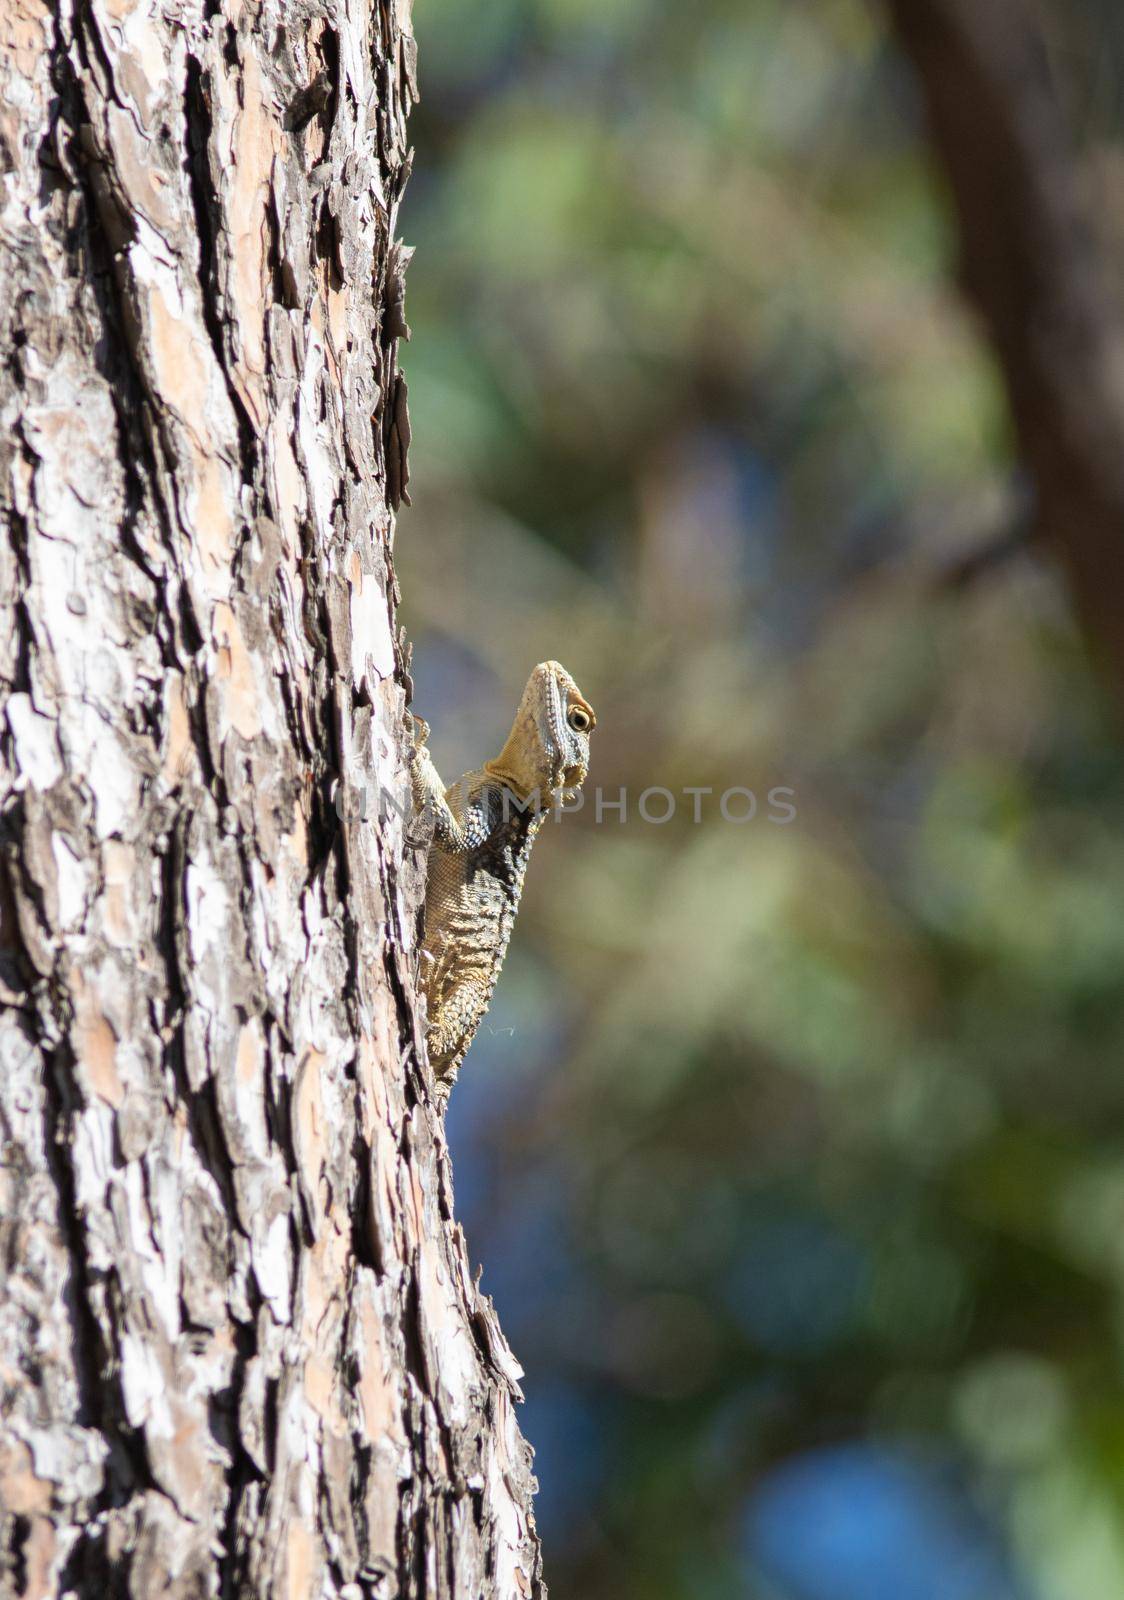 Laudakia stellio - Agama lizard sits on a the pine tree in Turkey by Studia72